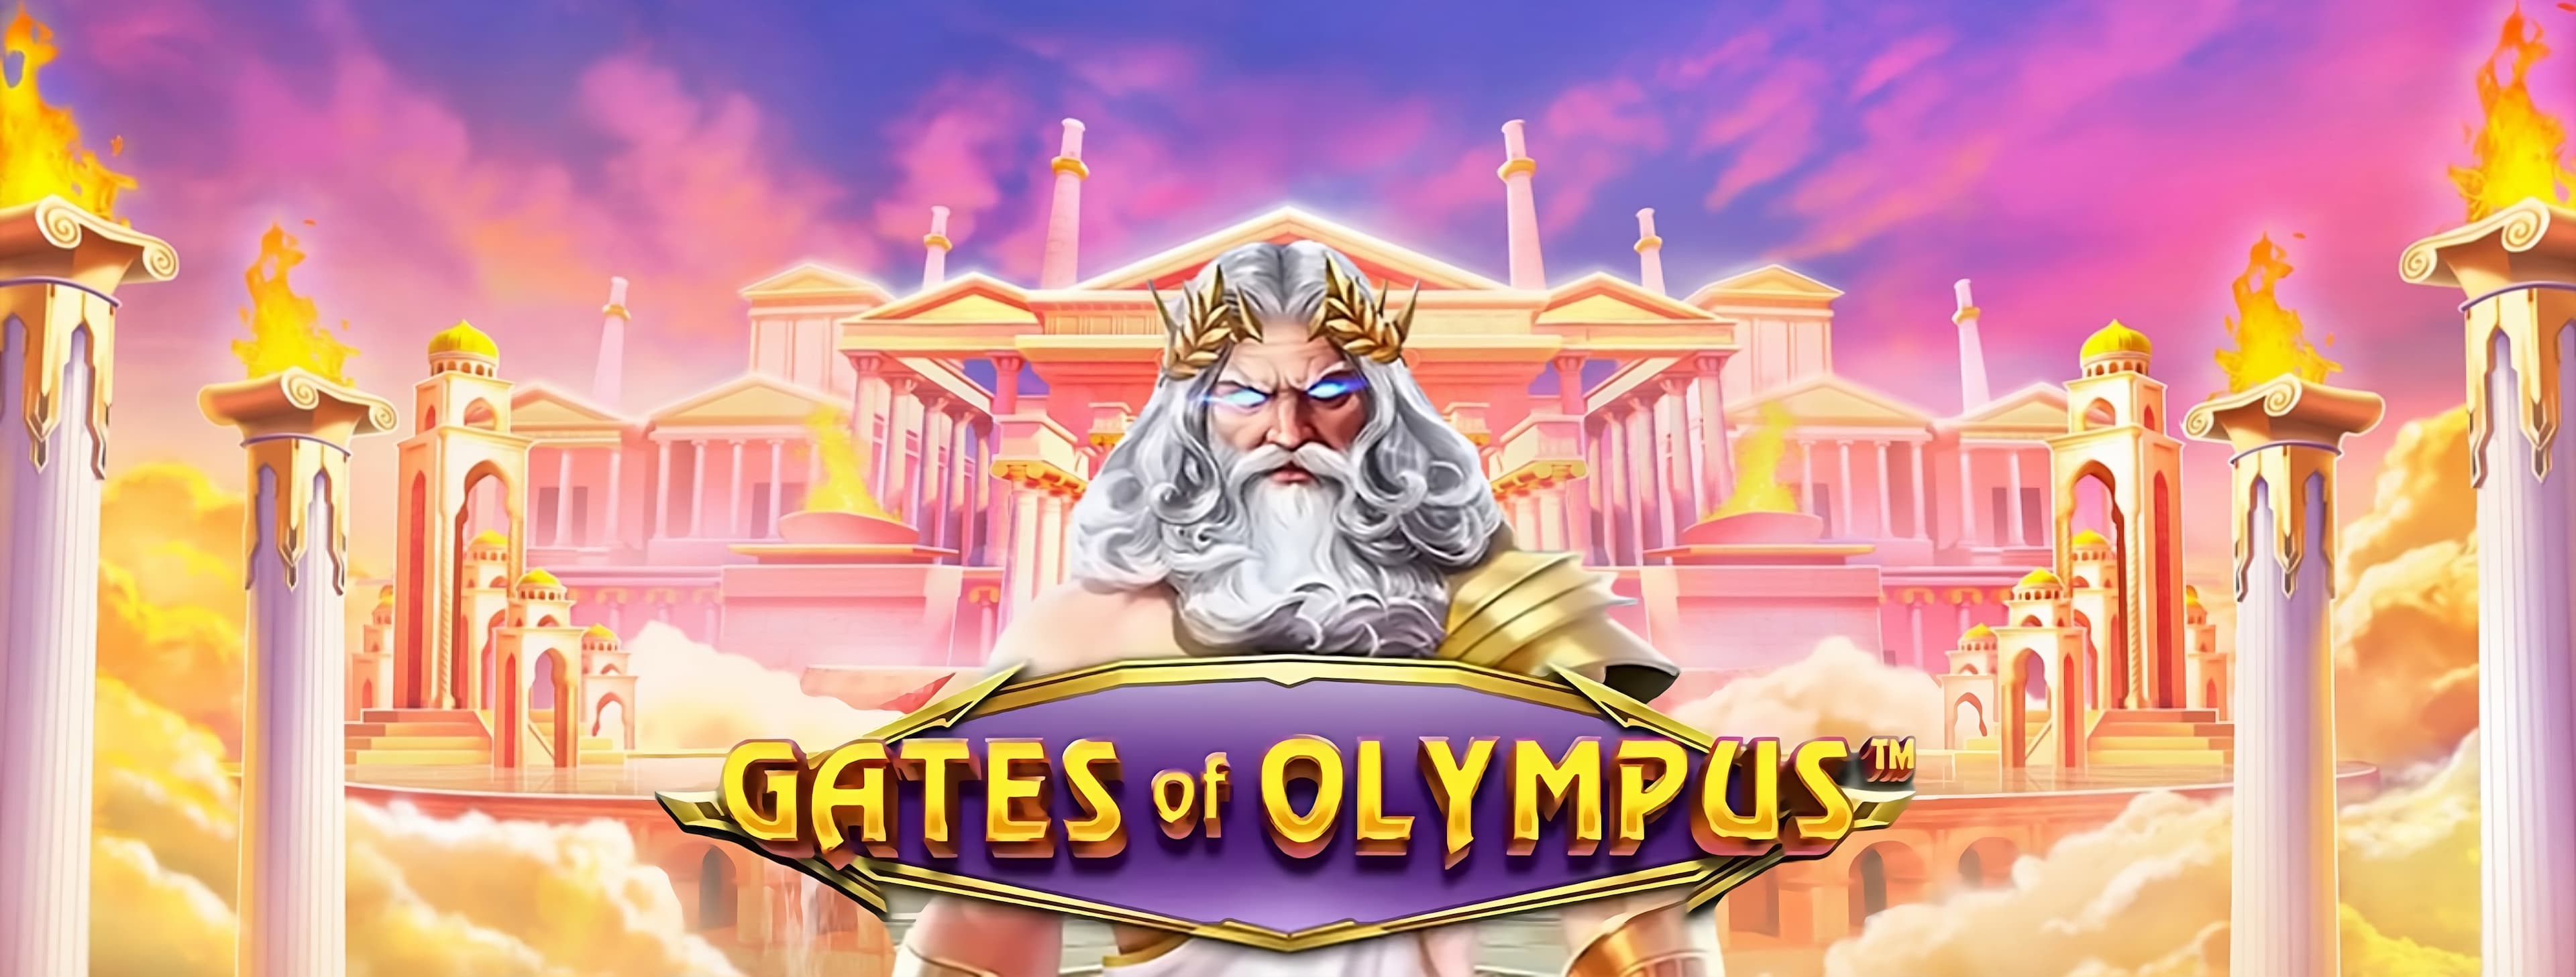 Gates of Olympus cover